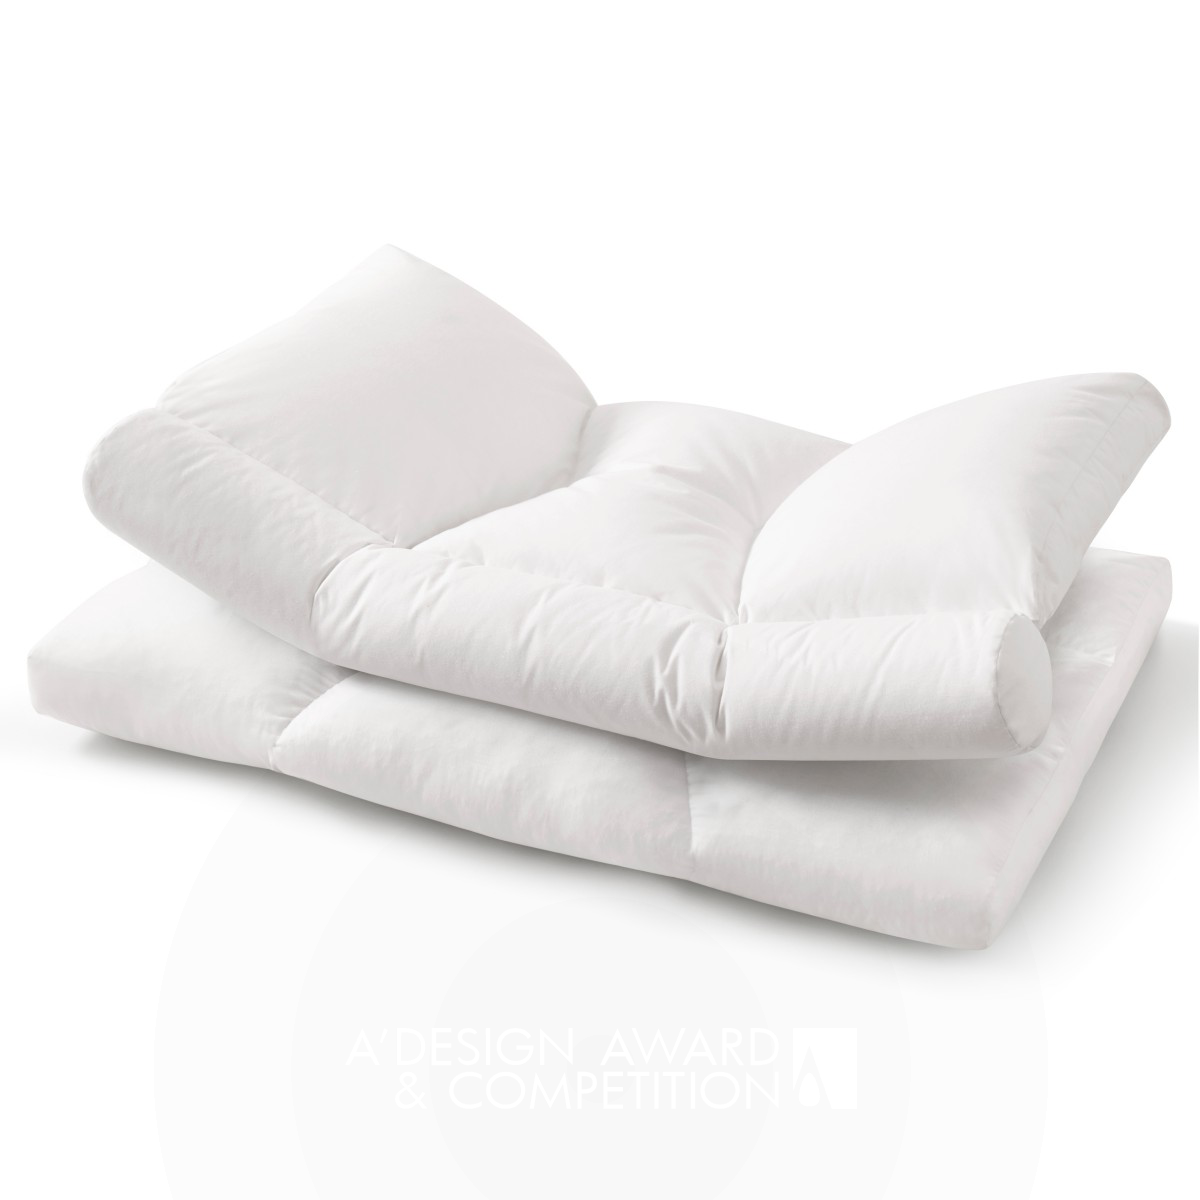 Rosuba Side Sleeping Pillow